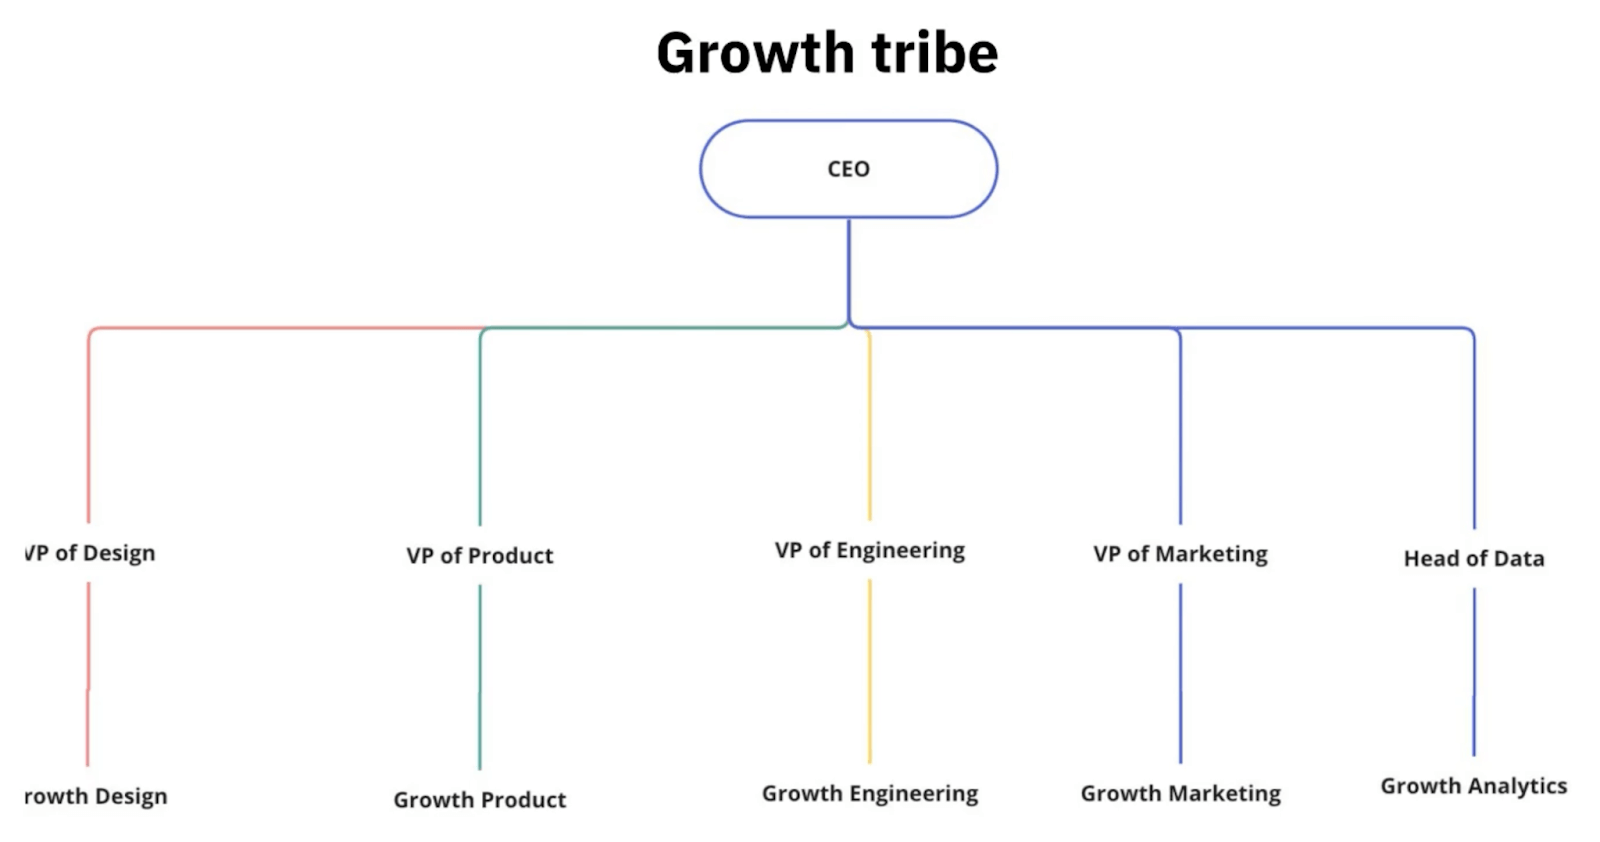 Growth tribe model job role chart